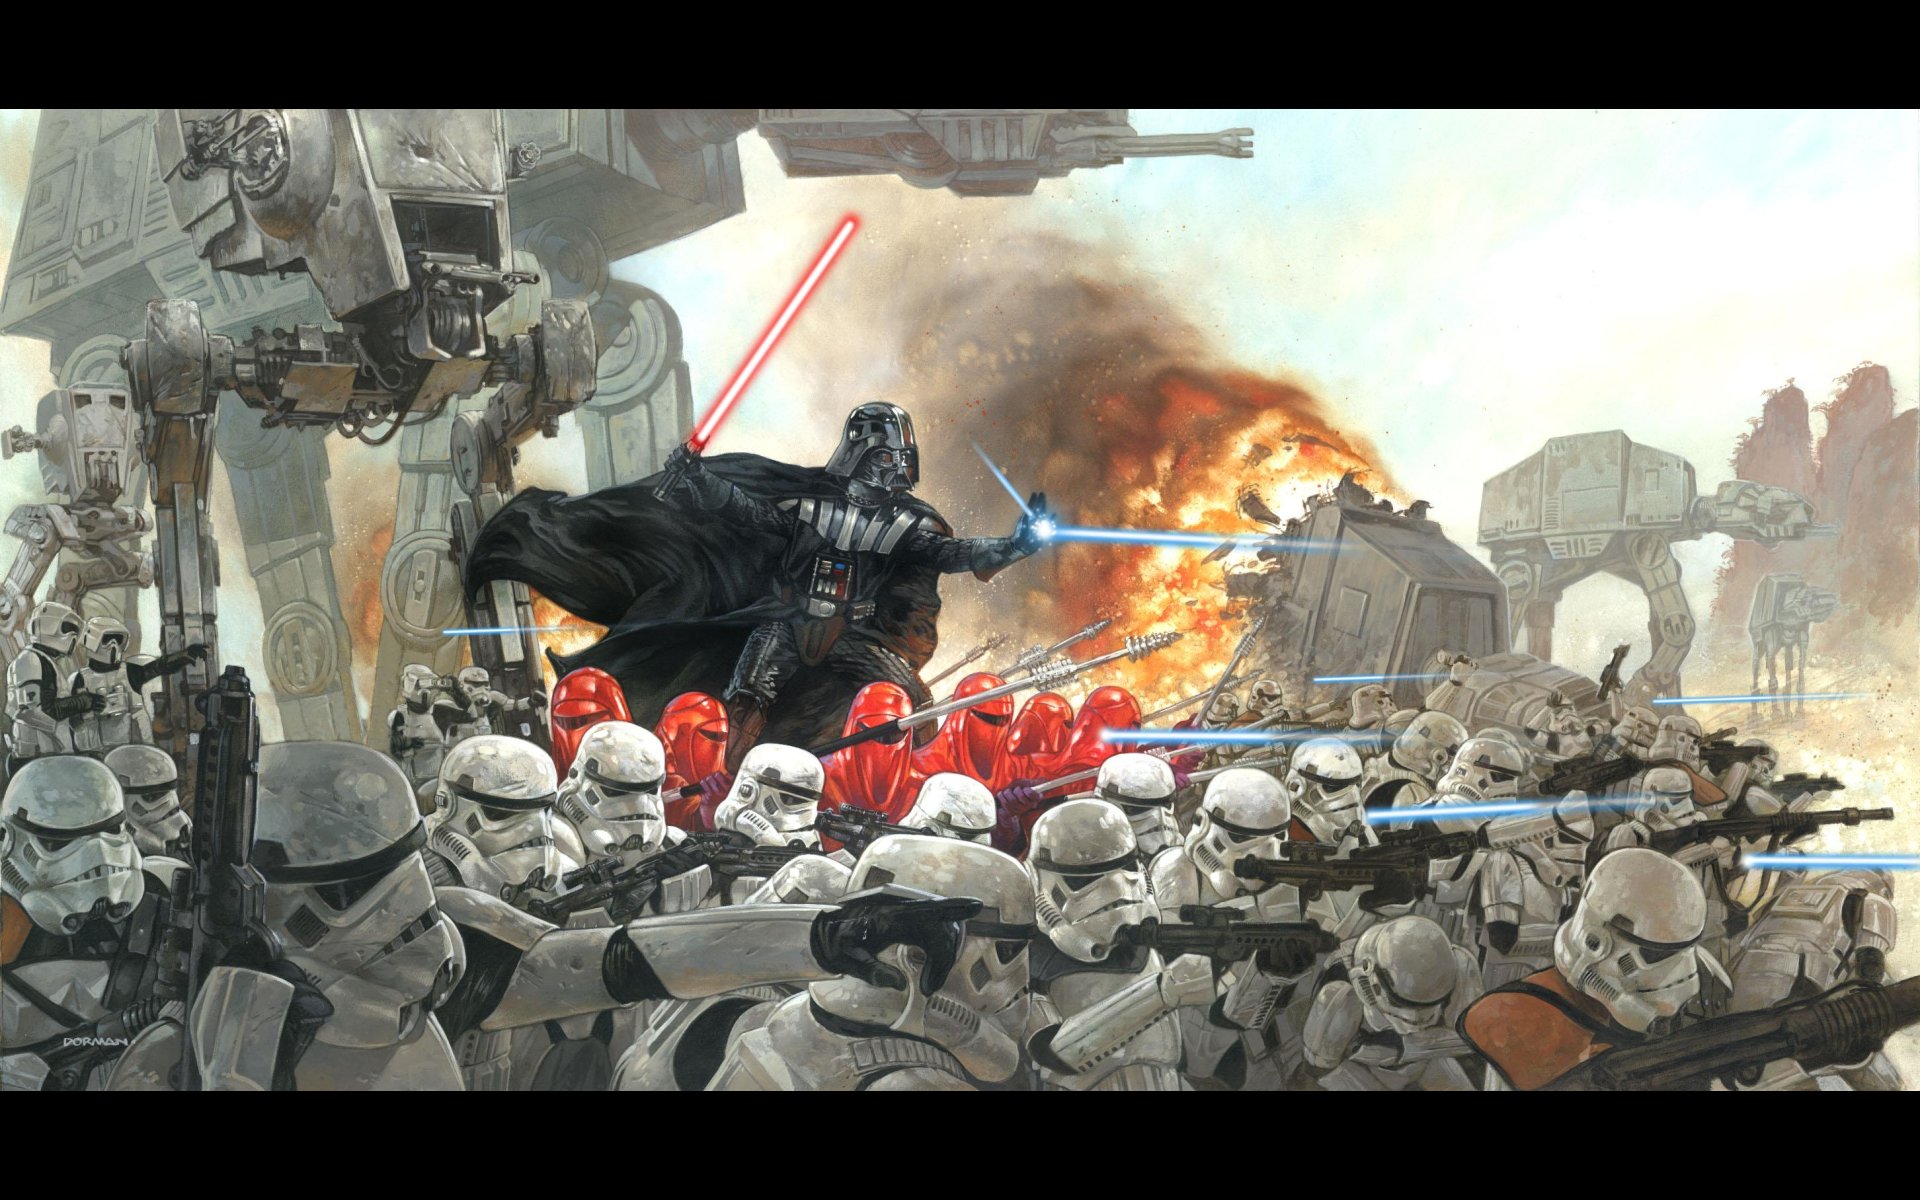 Here S My Batch Of Star Wars Themed Wallpaper Enjoy